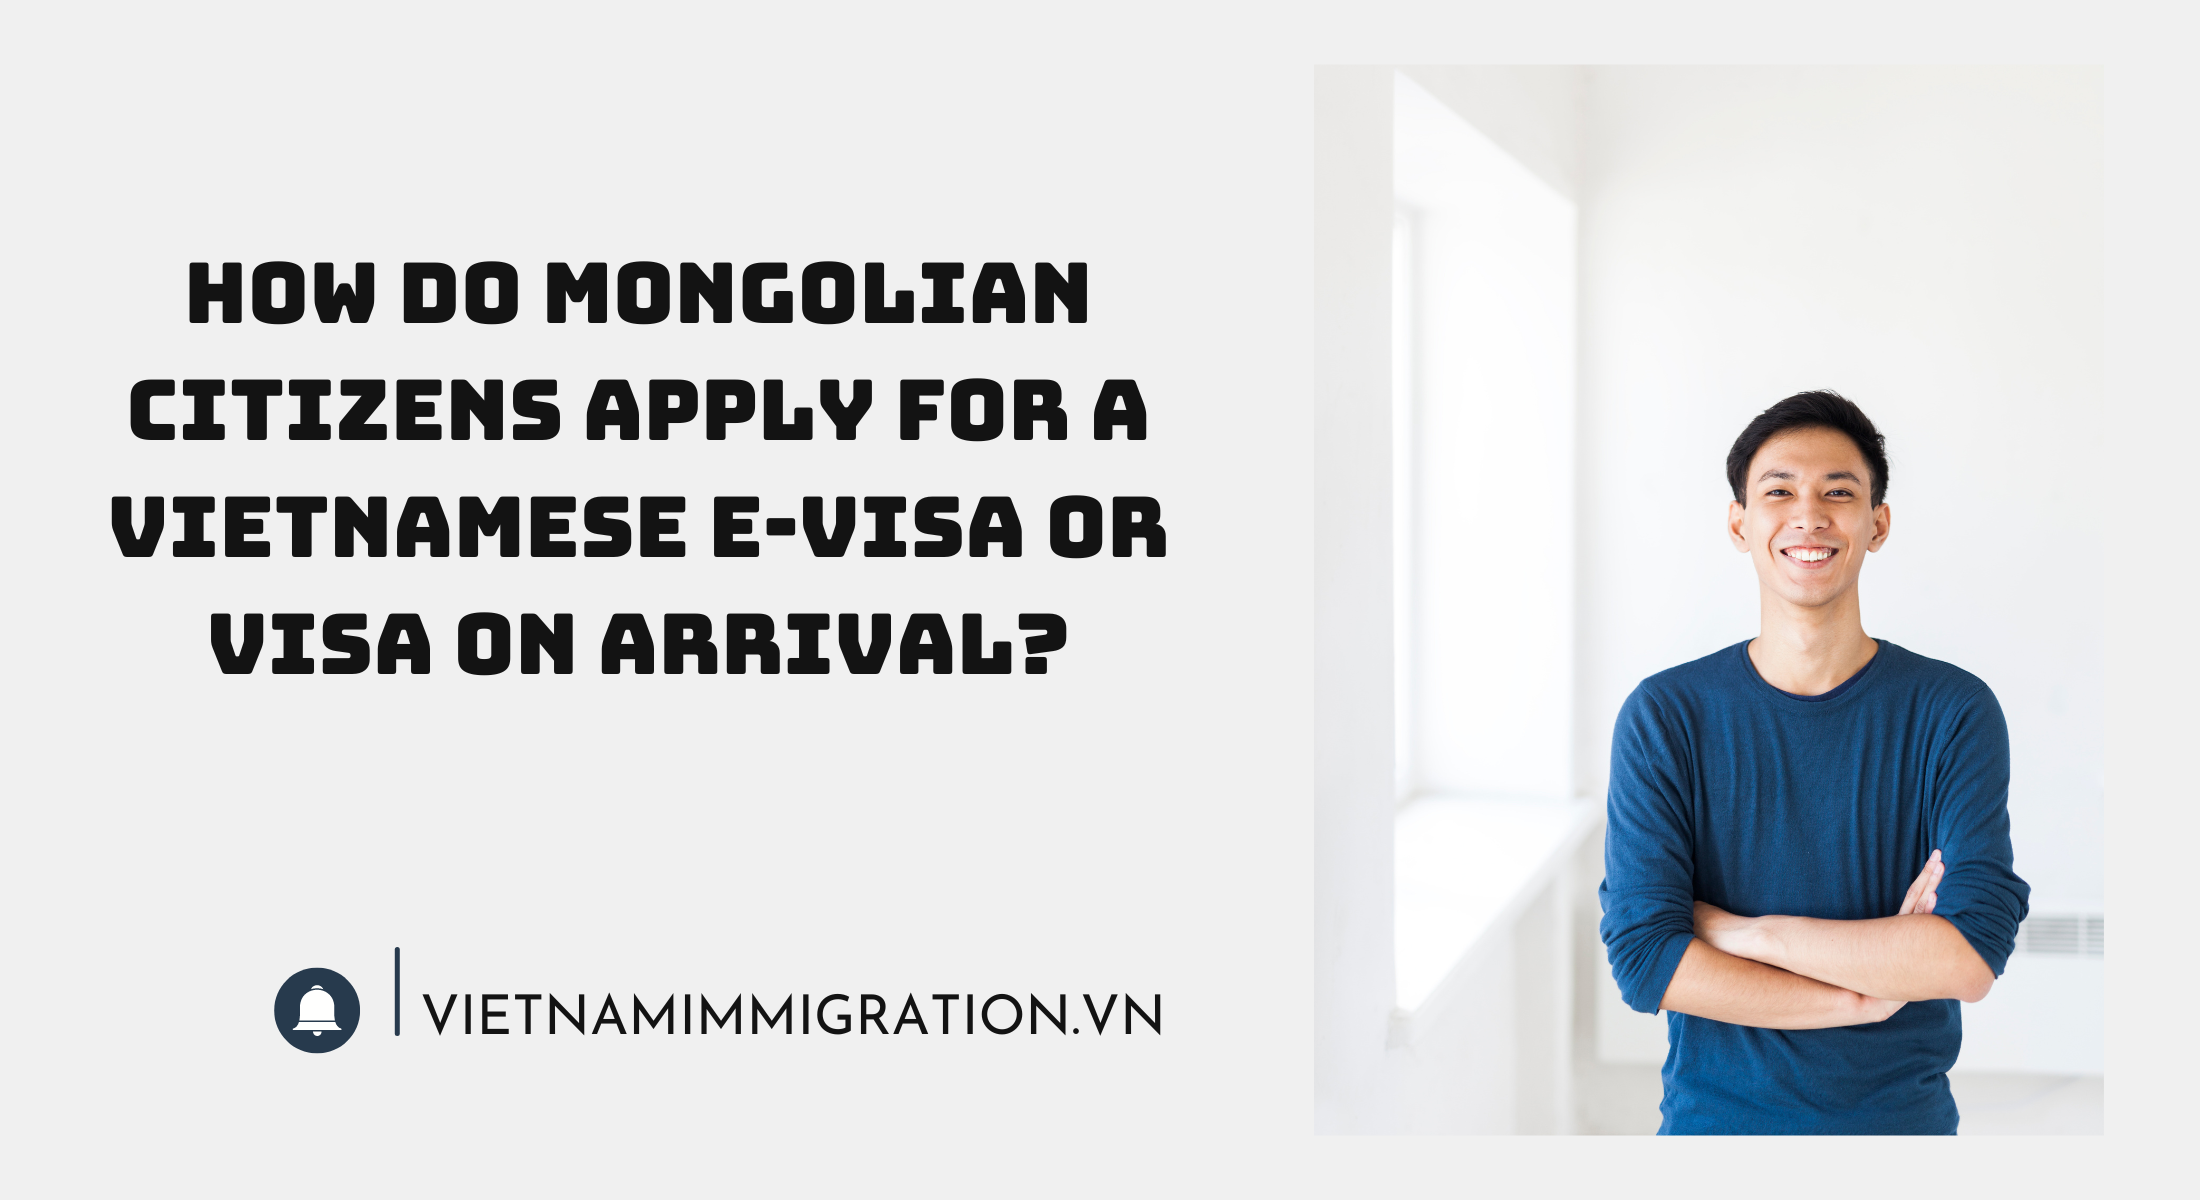 Vietnam Reopens Visa Applications For Mongolian Citizens E Visa And Landing Visa 6886